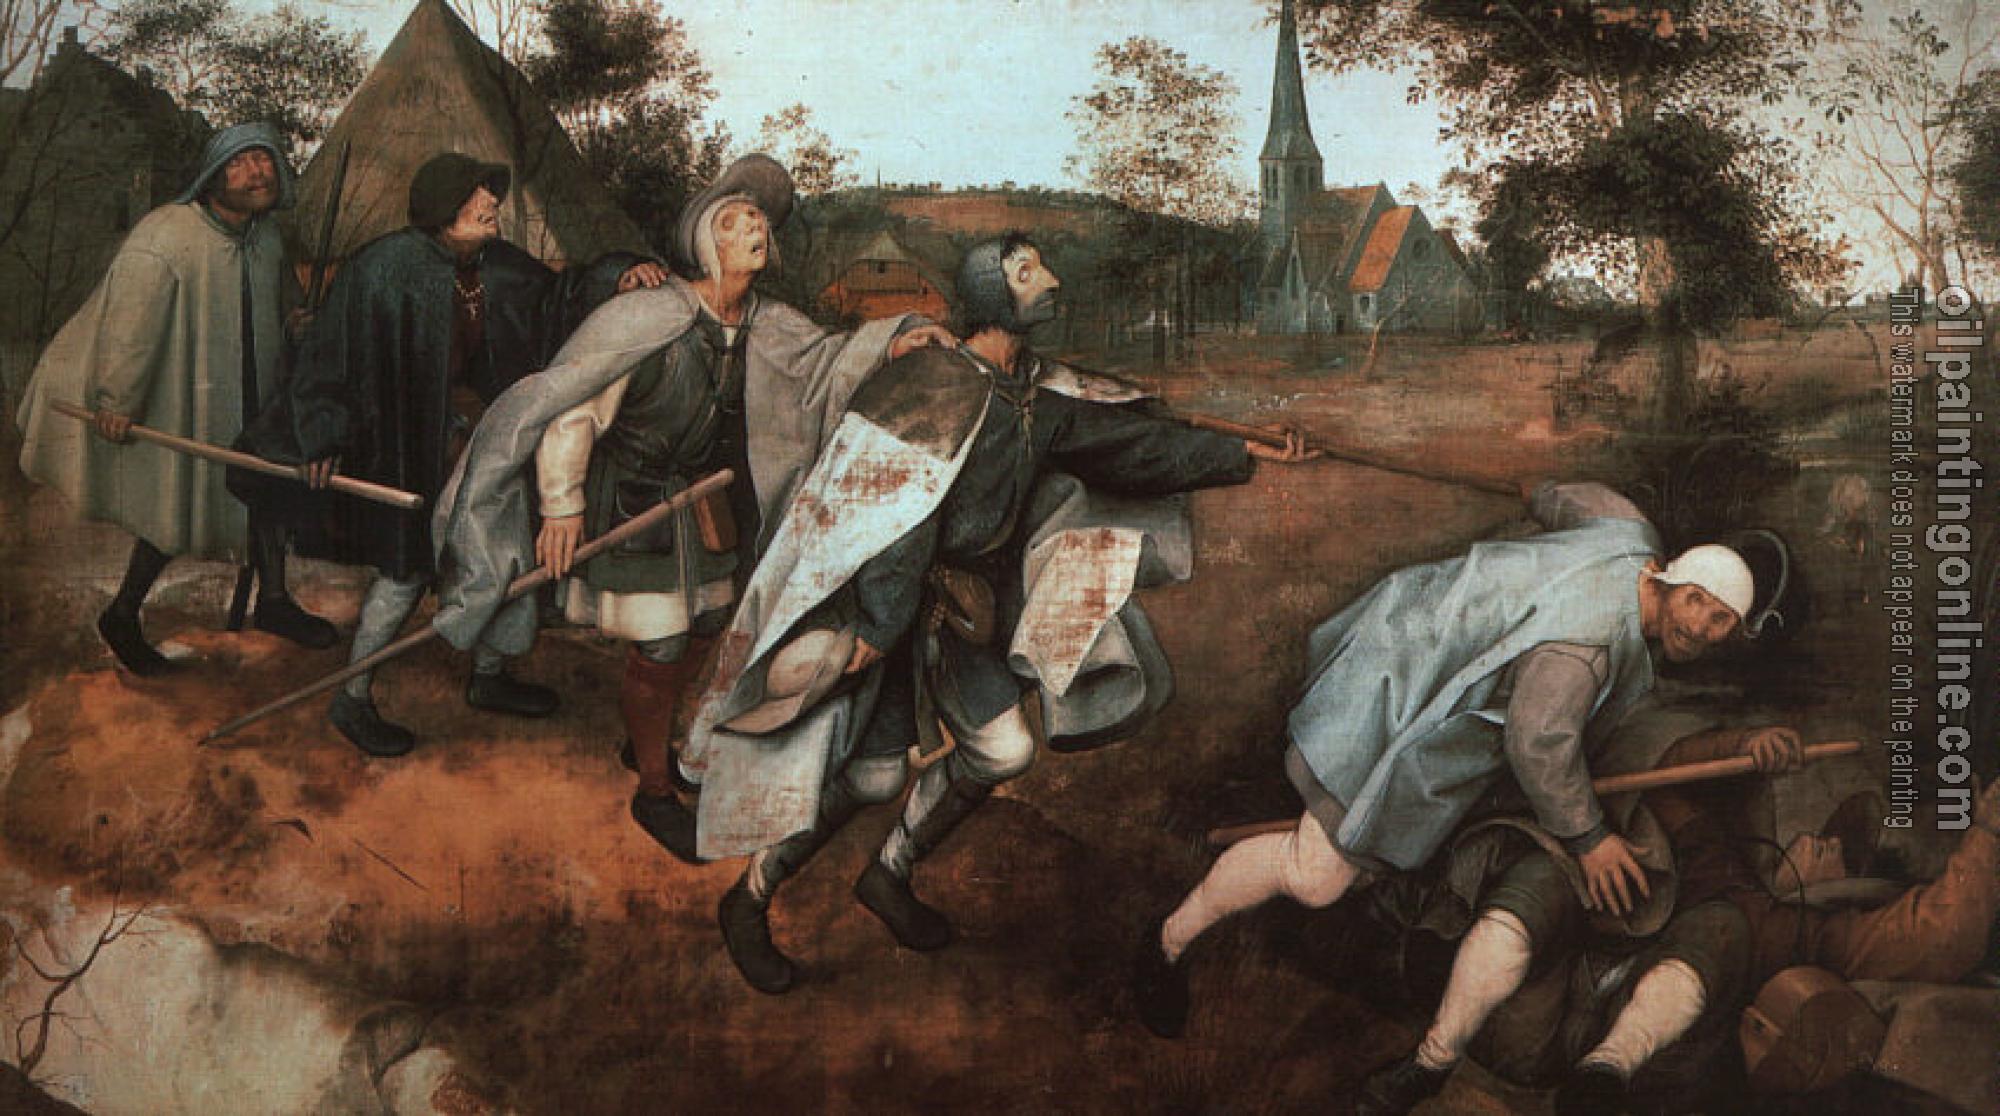 Bruegel, Pieter the Elder - The Parable of the Blind Leading the Blind